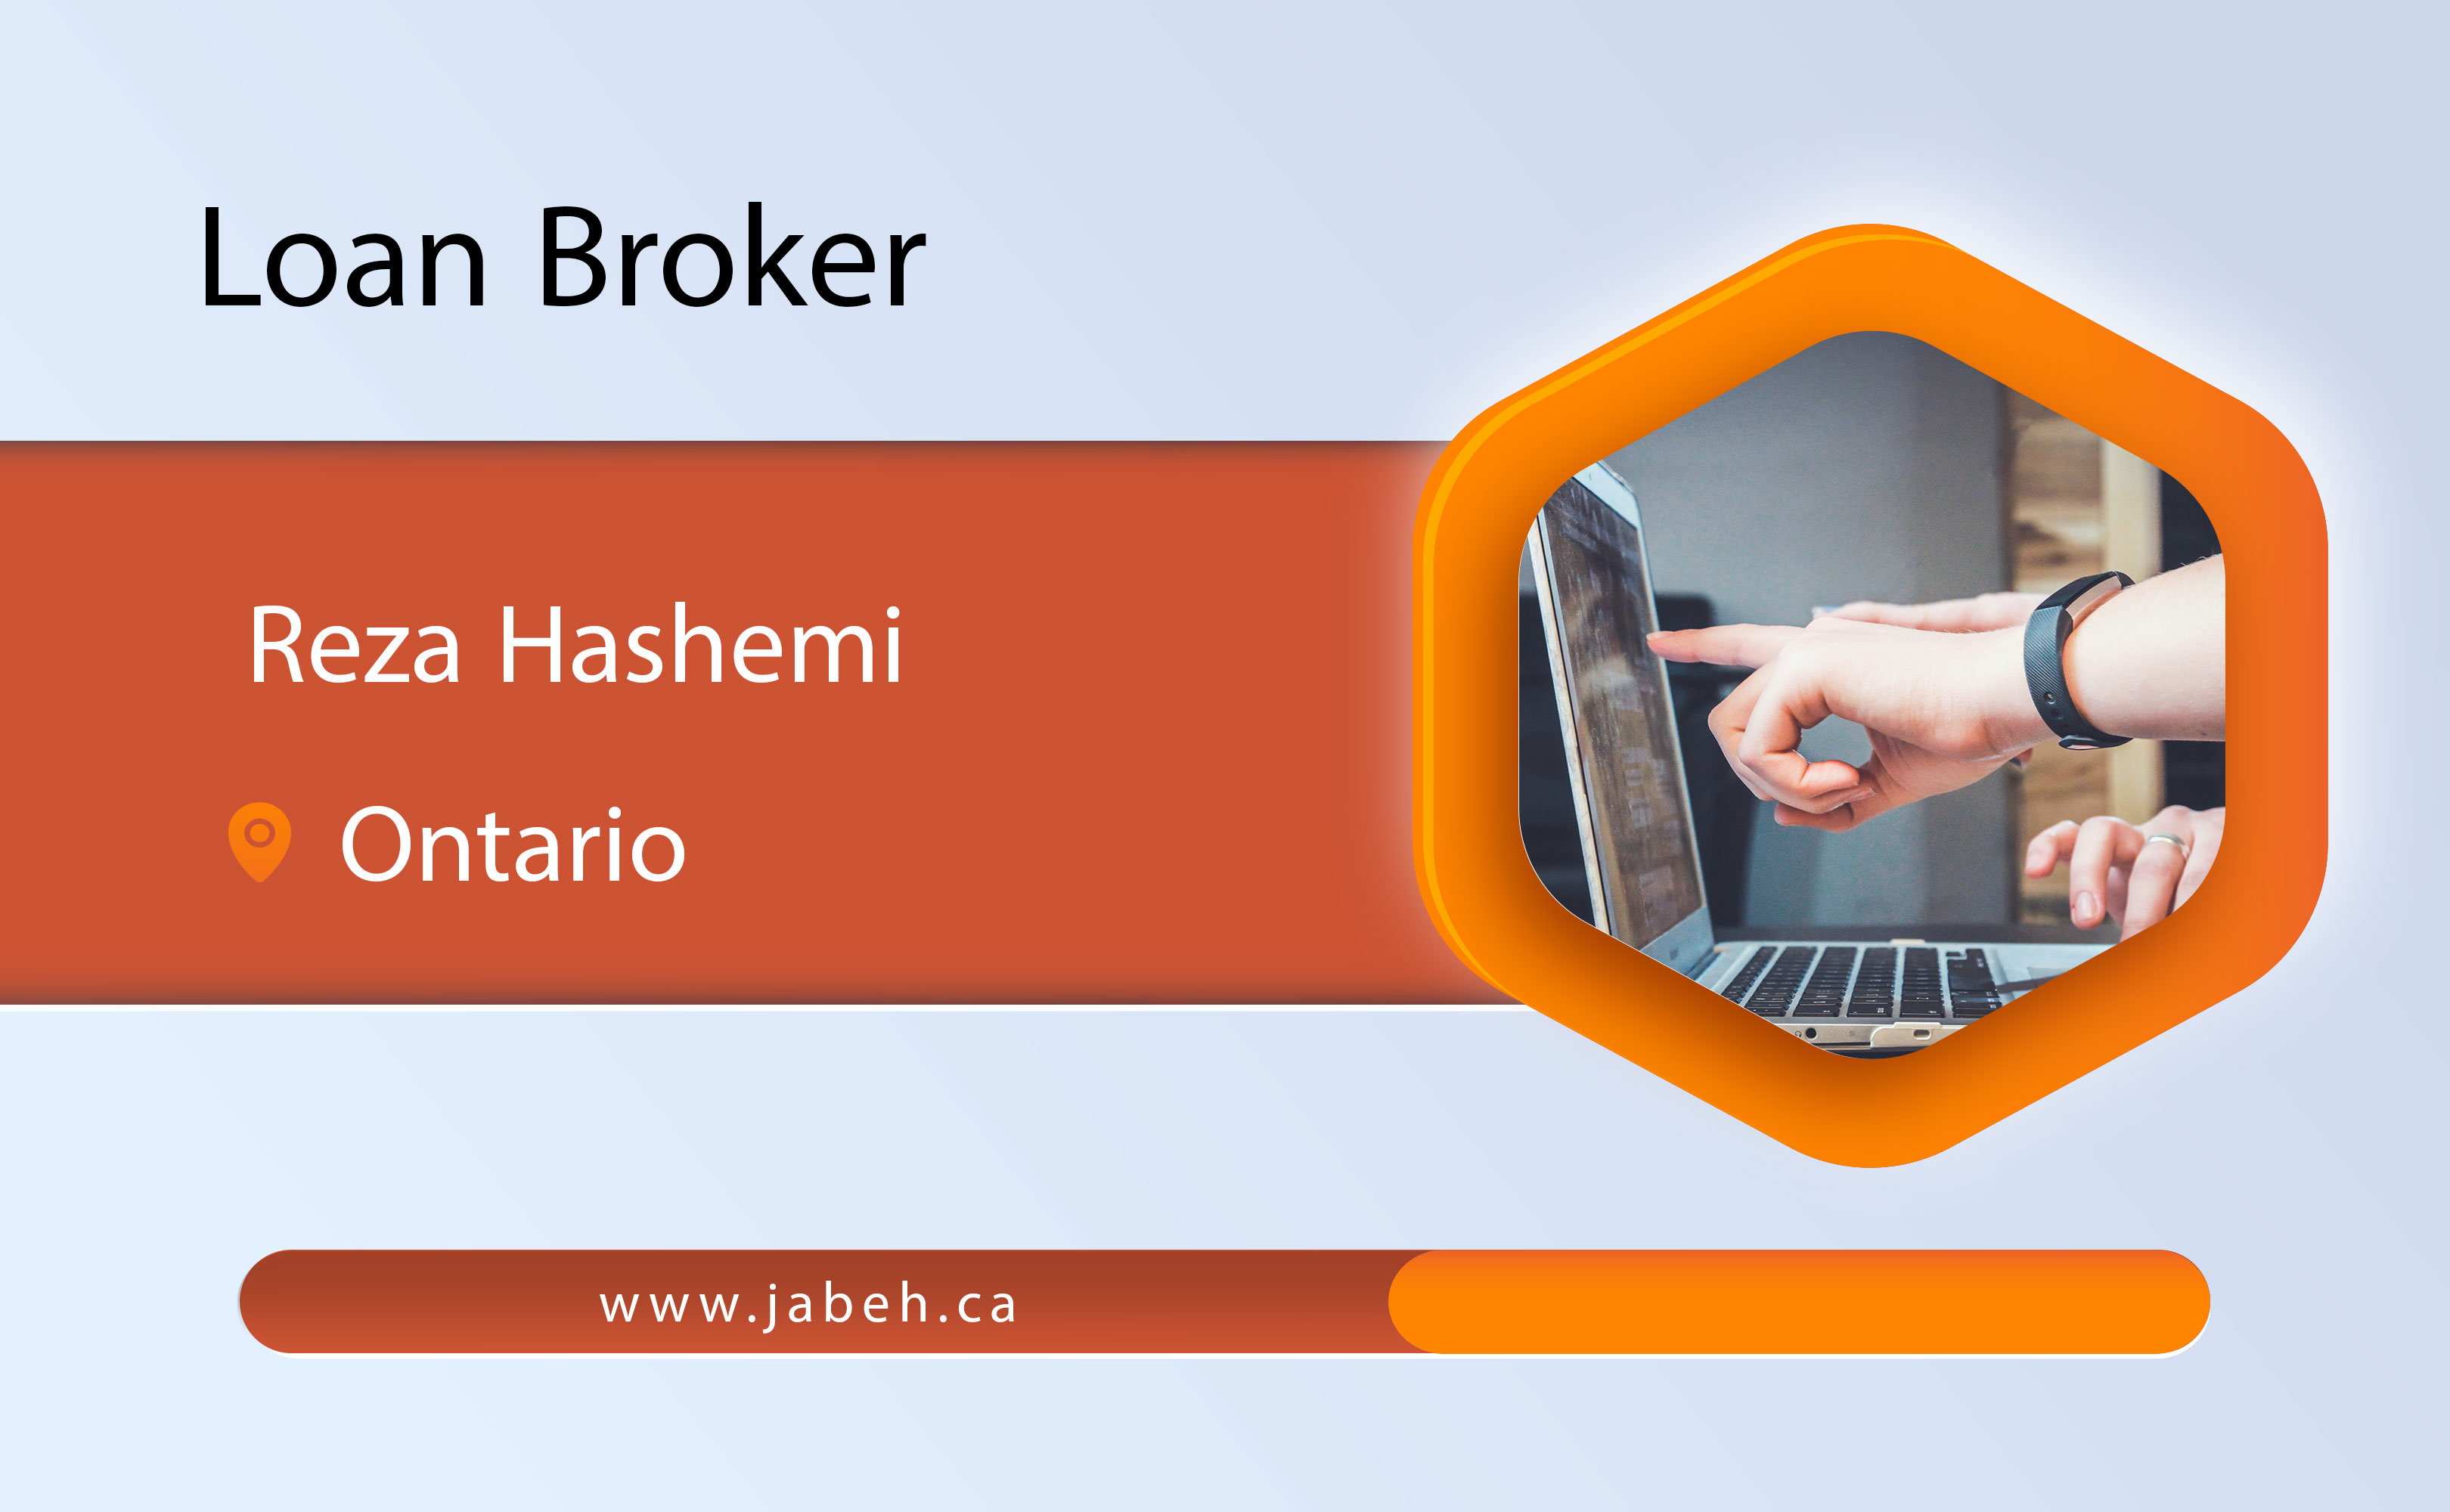 Iranian loan broker Reza Hashemi in Ontario